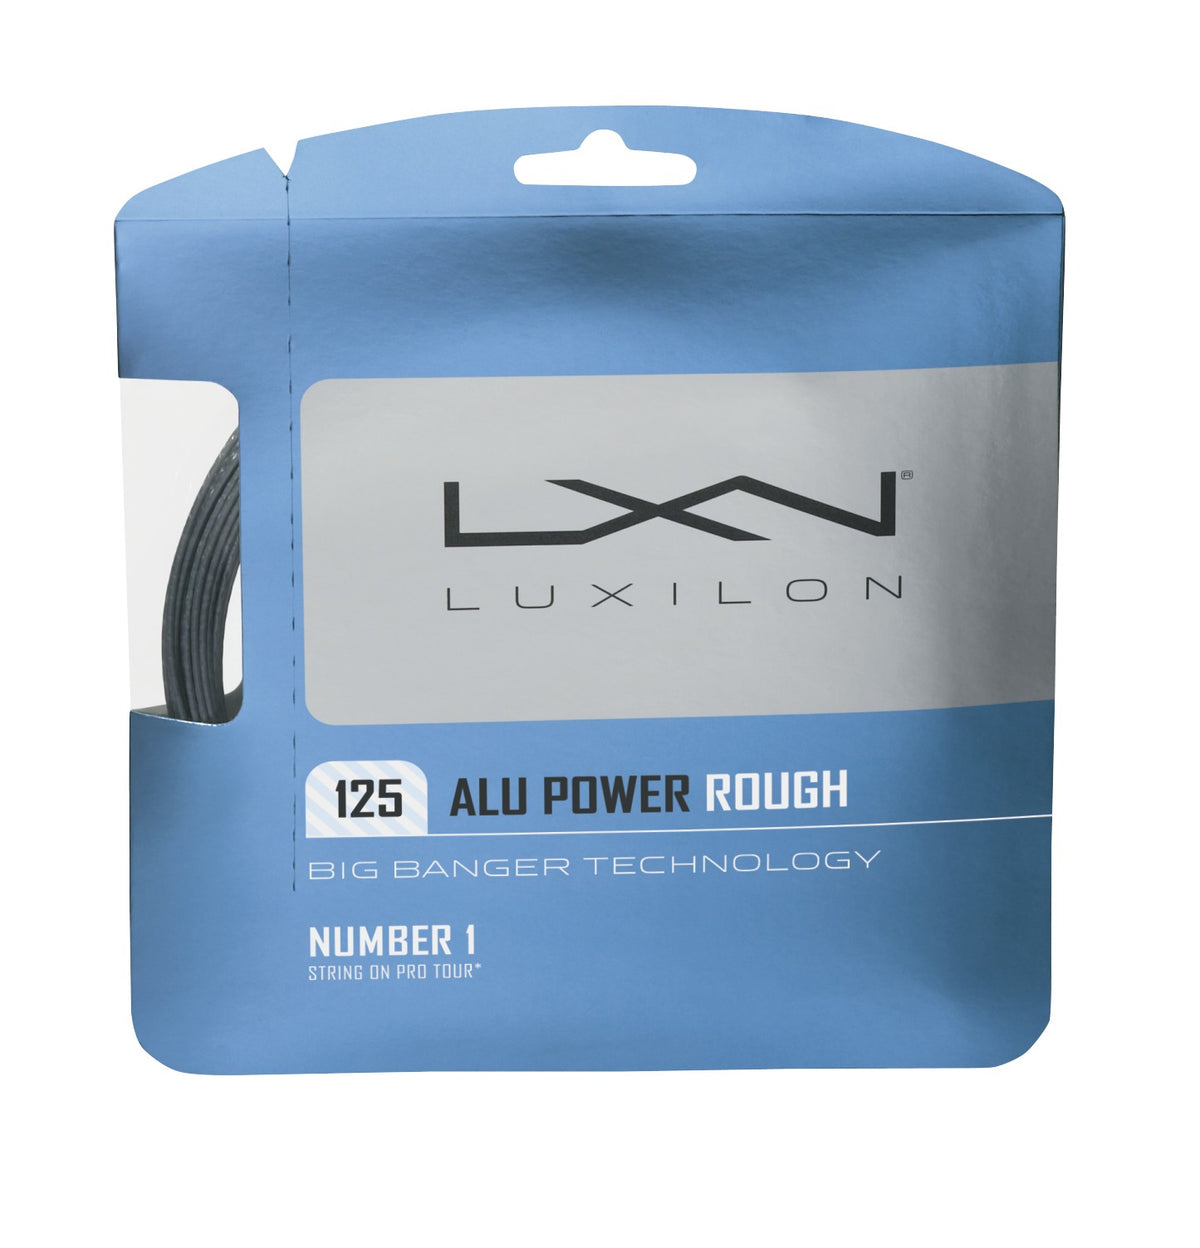 Luxilon BB Alu Power Rough 125 Cartela